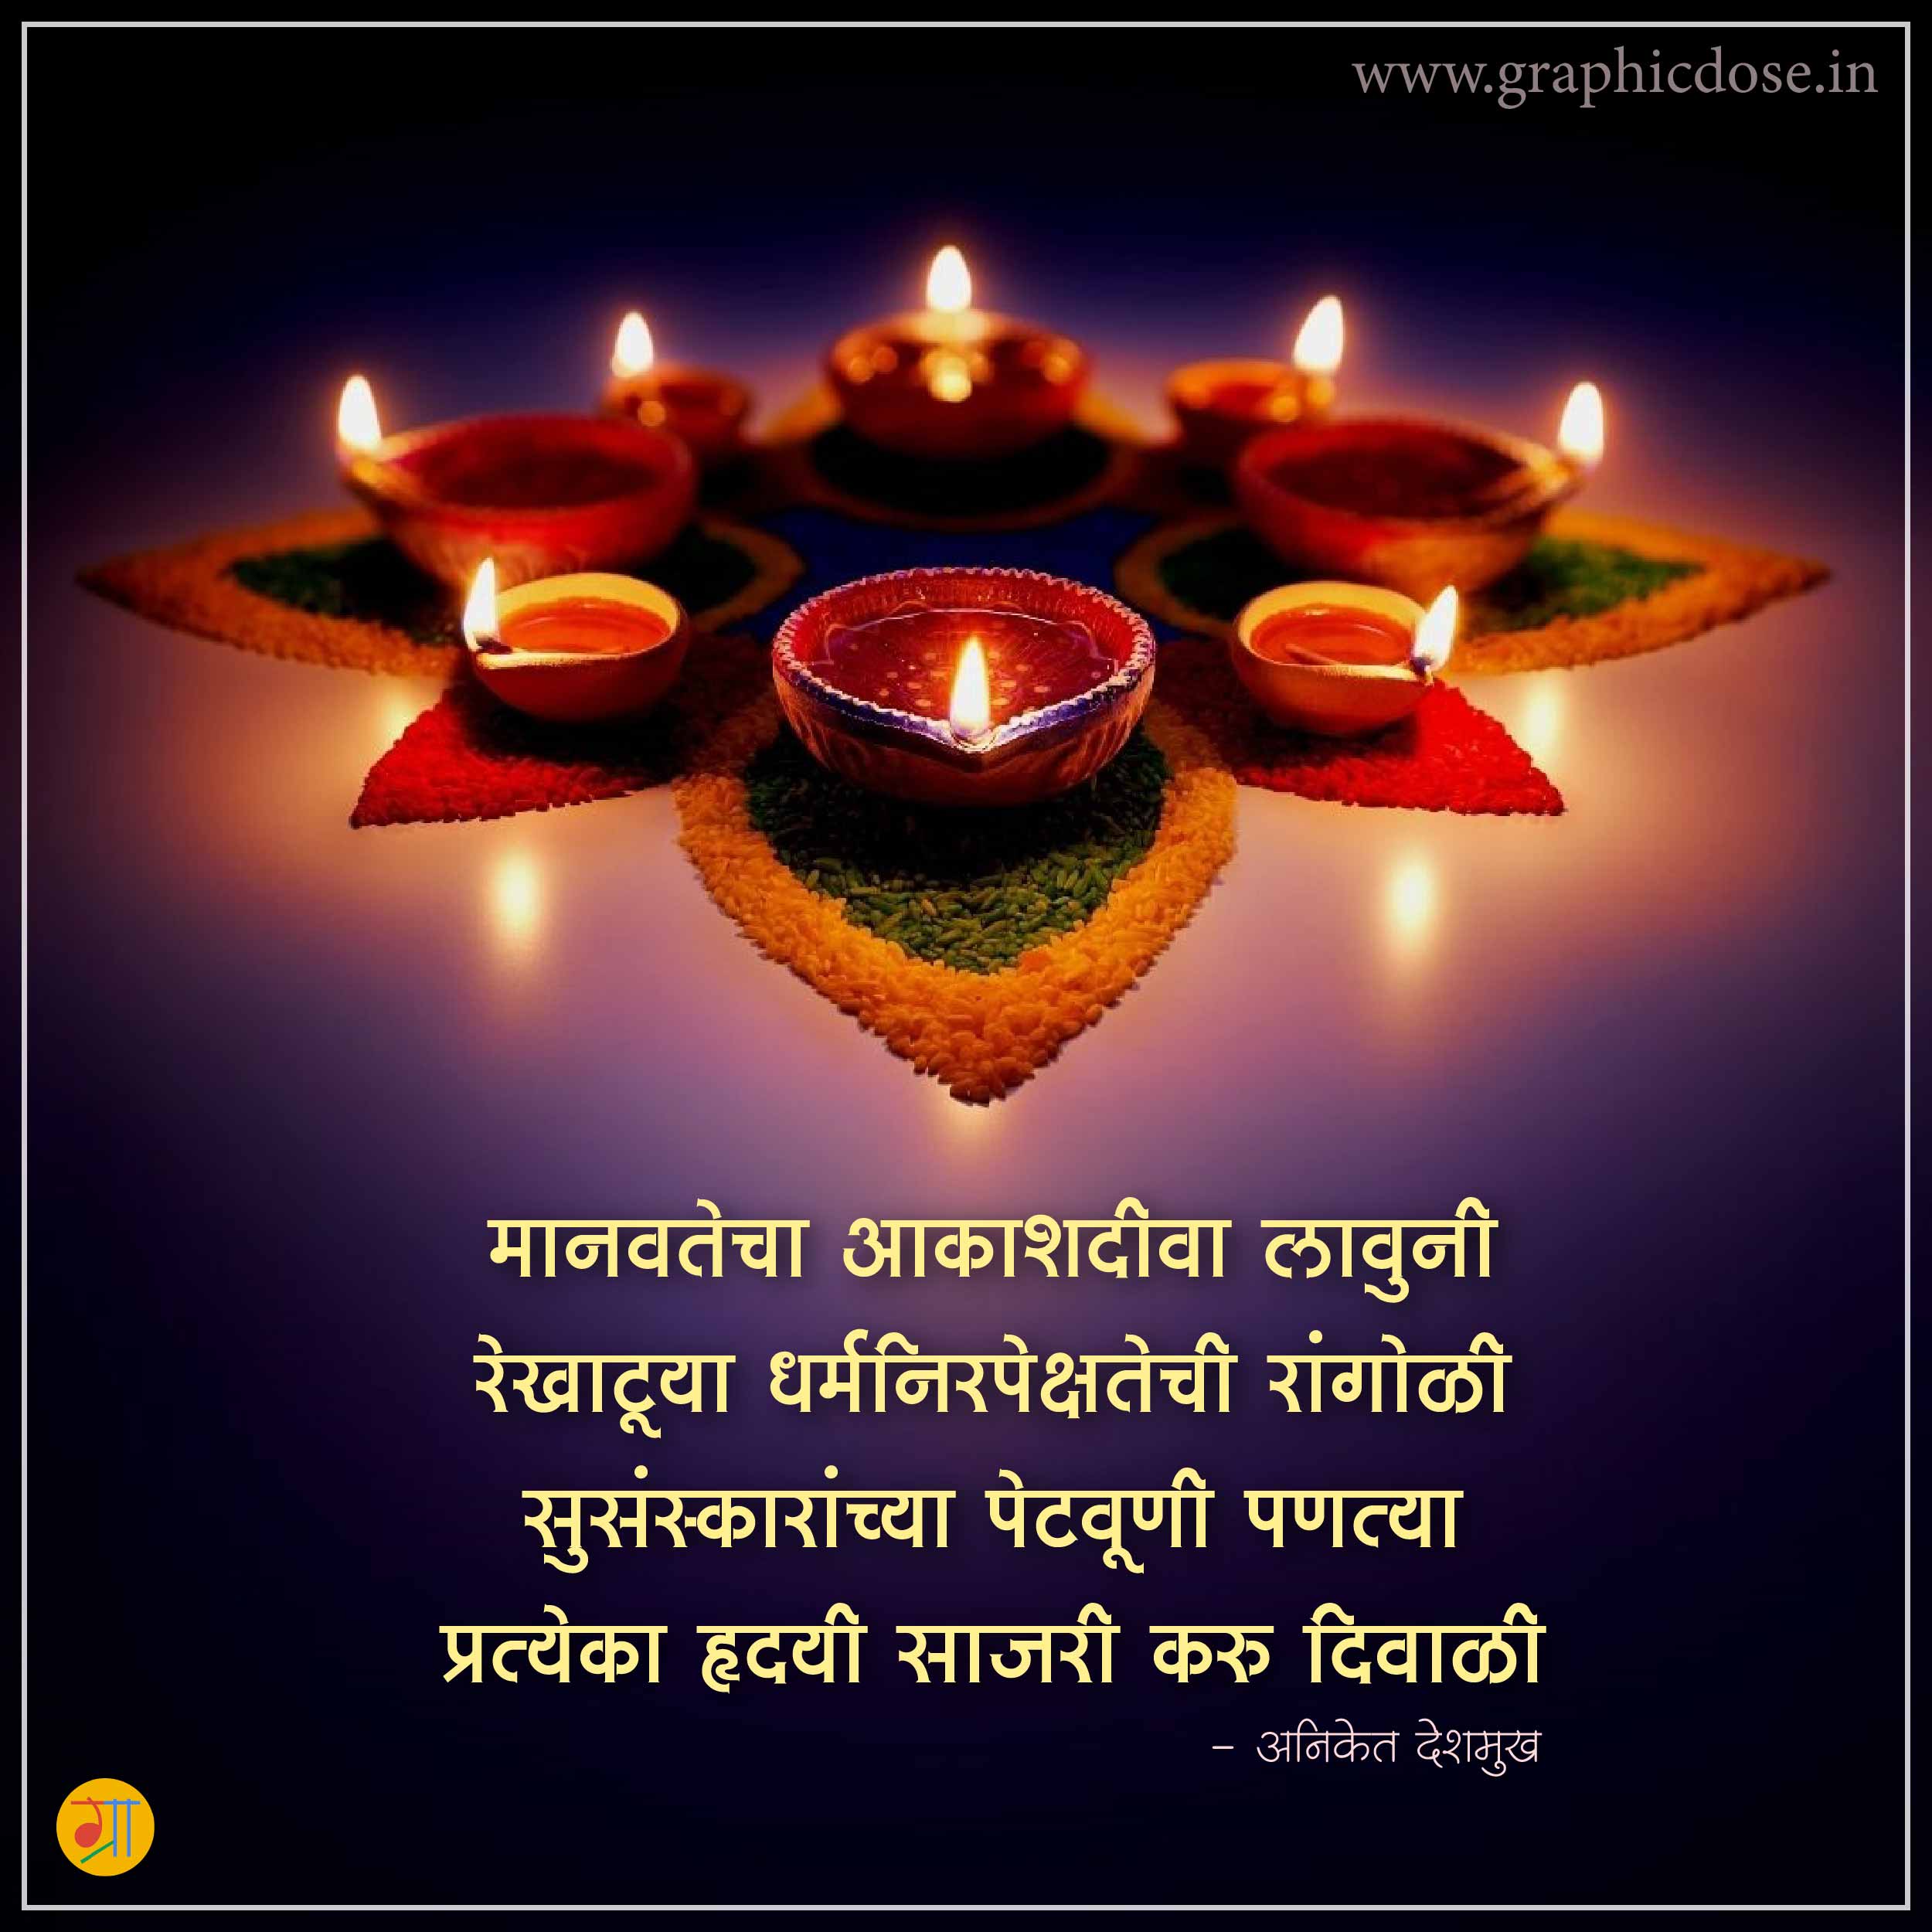 Diwali wishes in Marathi Graphic Dose